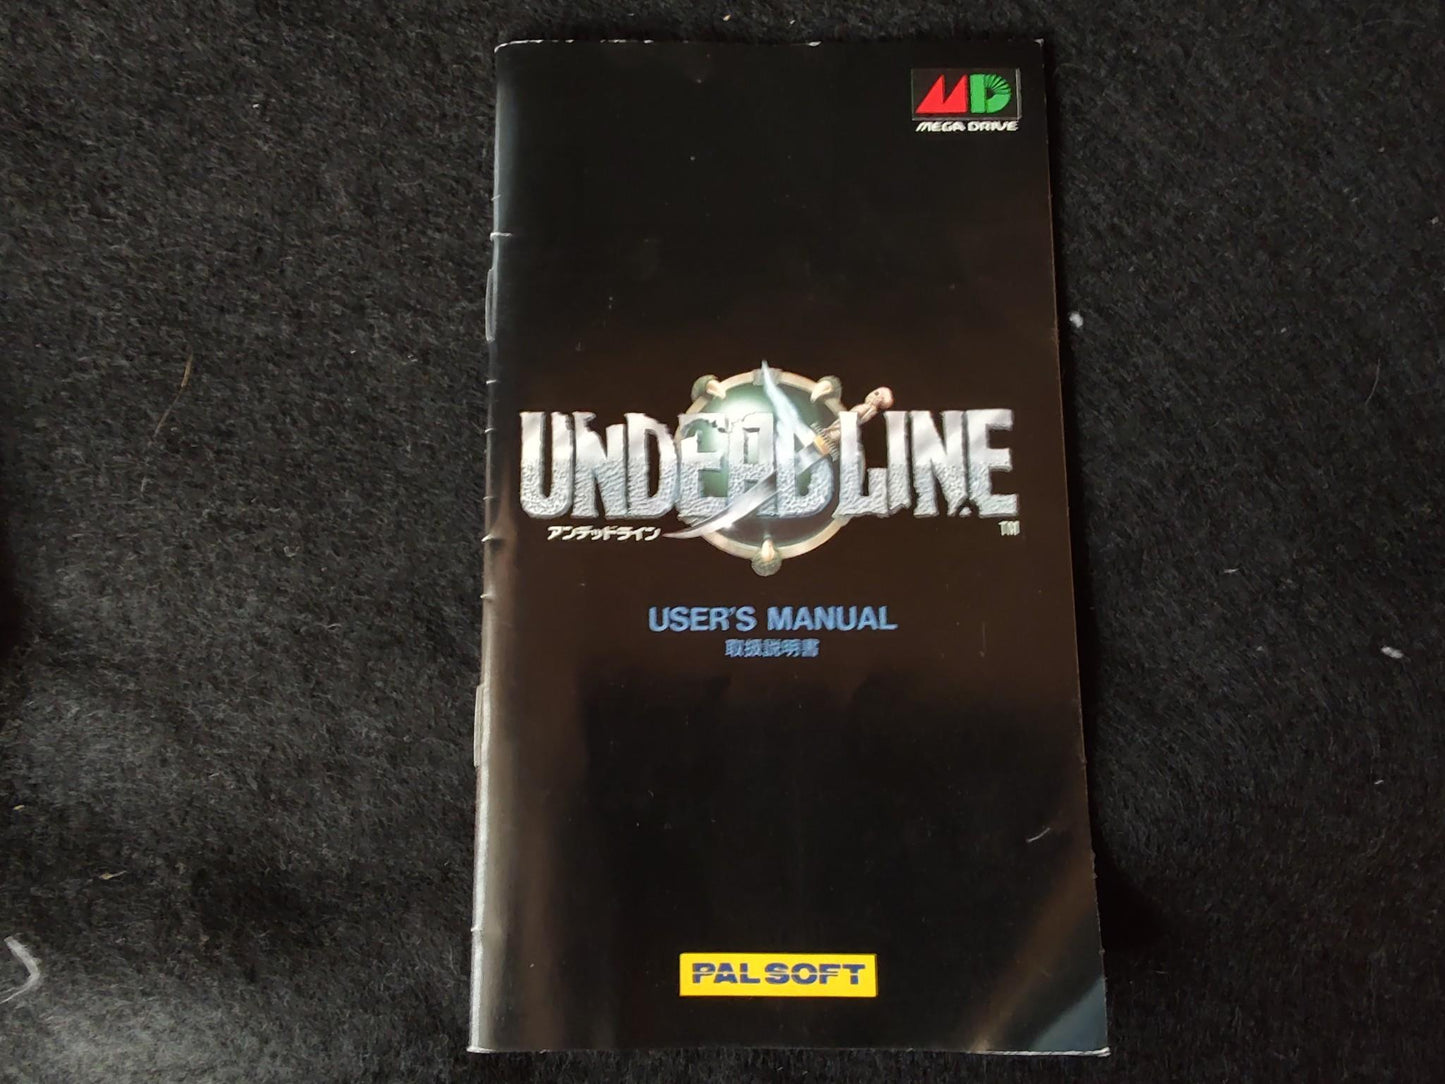 Undeadline (Undead Line) SEGA MEGA DRIVE (Genesis ) Manual, Boxed set-g0129-